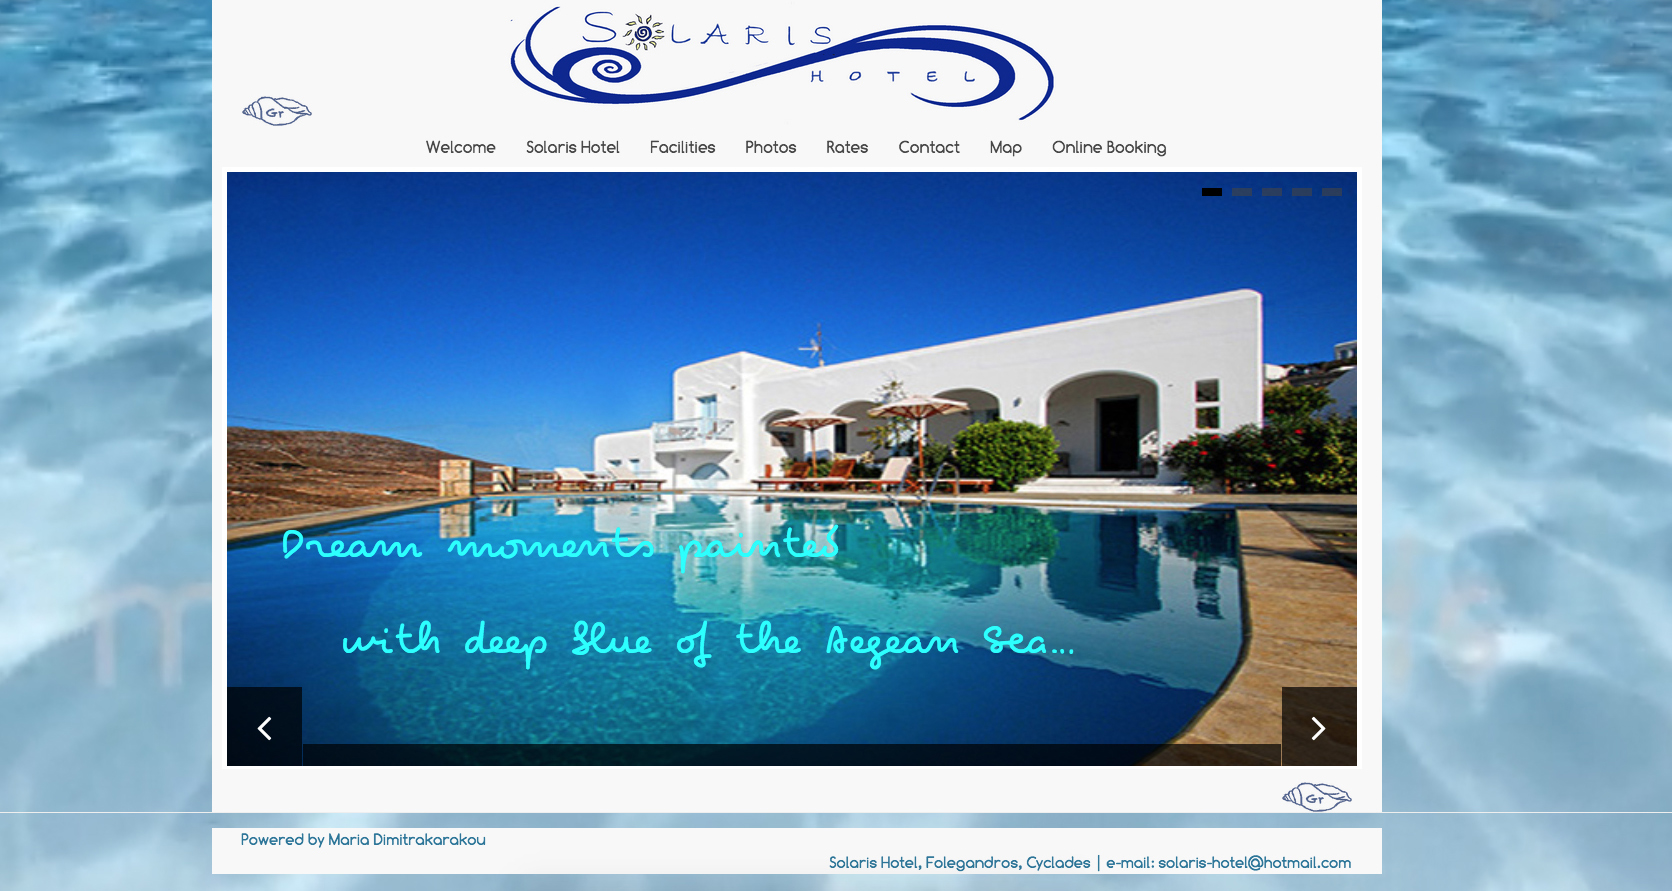 Solaris hotel website, Folegandros island, Greece by Maria Dimitrakarakou